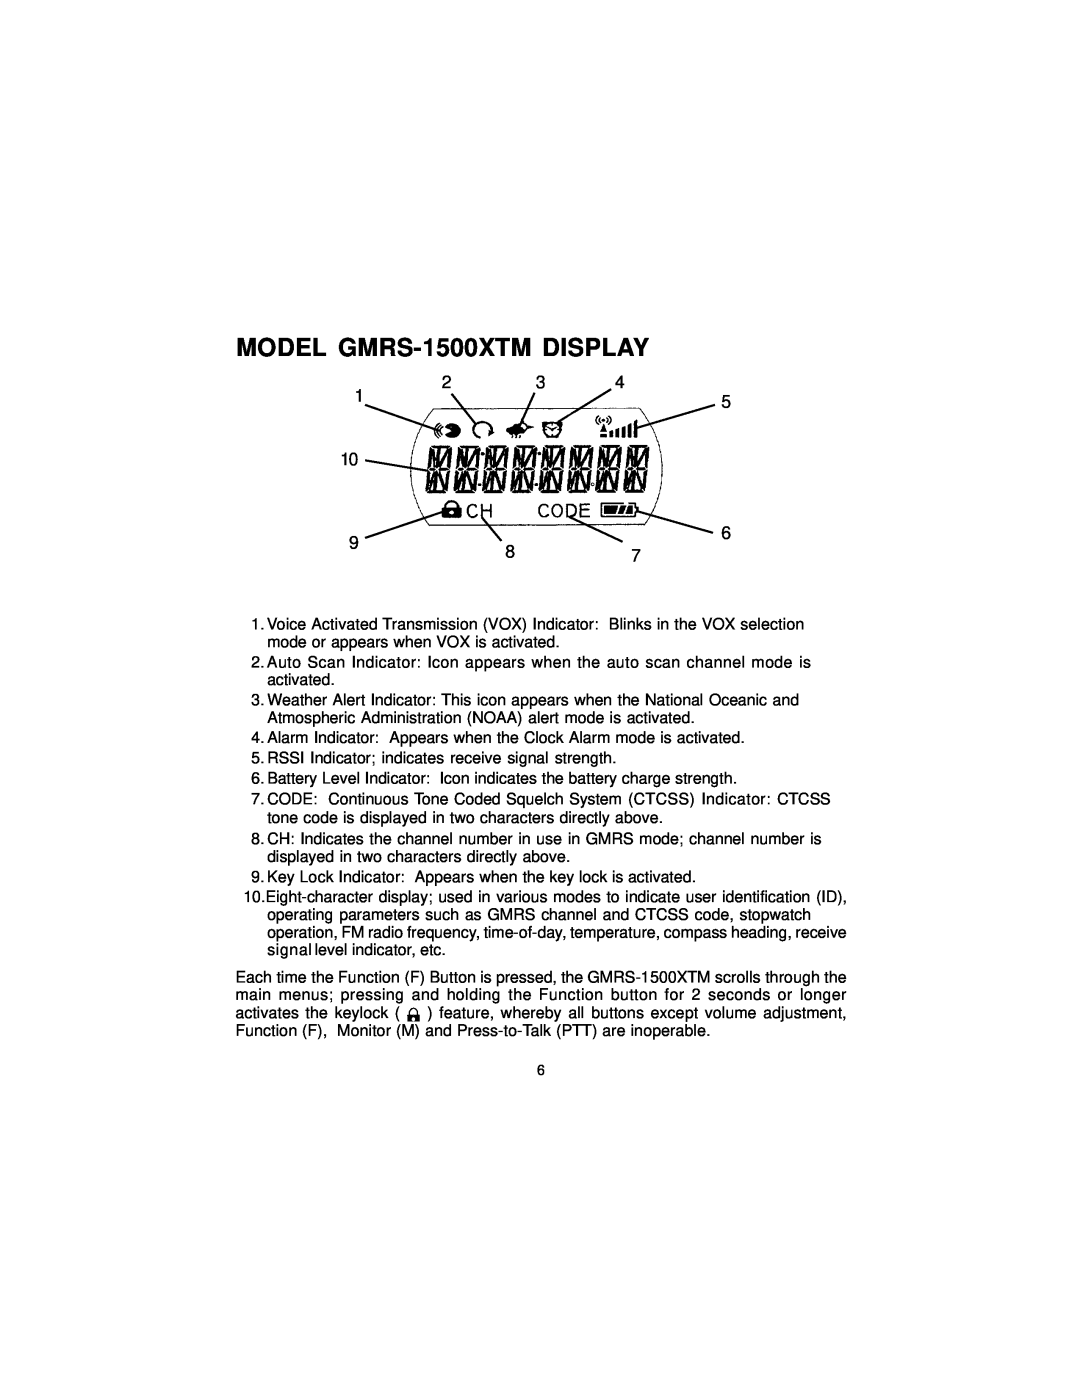 Audiovox manual MODEL GMRS-1500XTM DISPLAY 